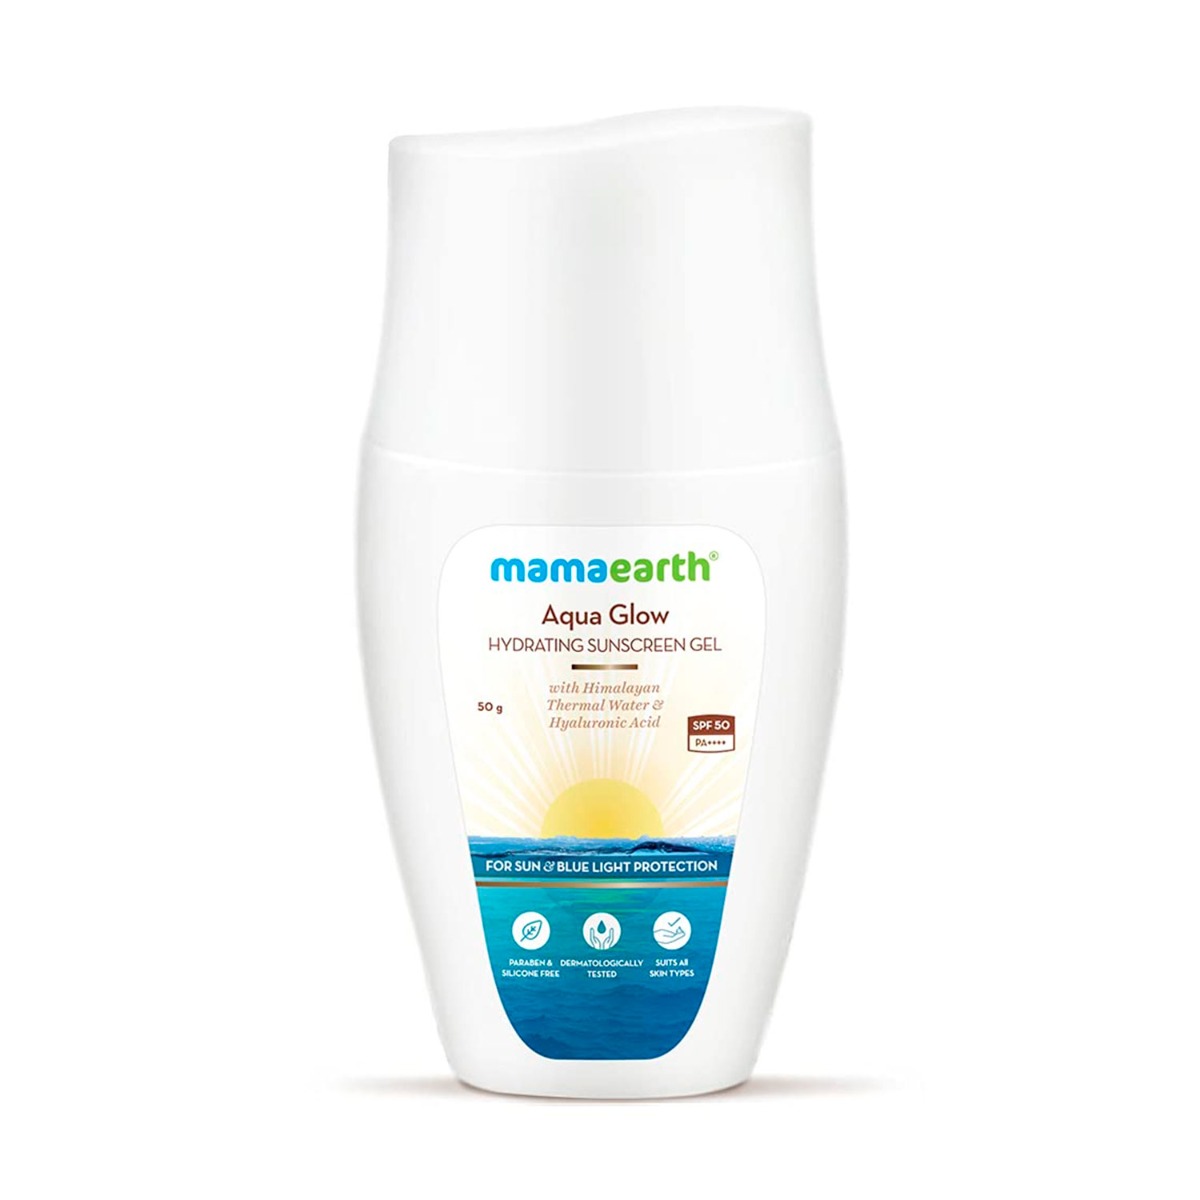 Mamaearth Aqua Glow Hydrating Sunscreen Gel With Himalayan Thermal Water & Hyaluronic Acid, 50gm